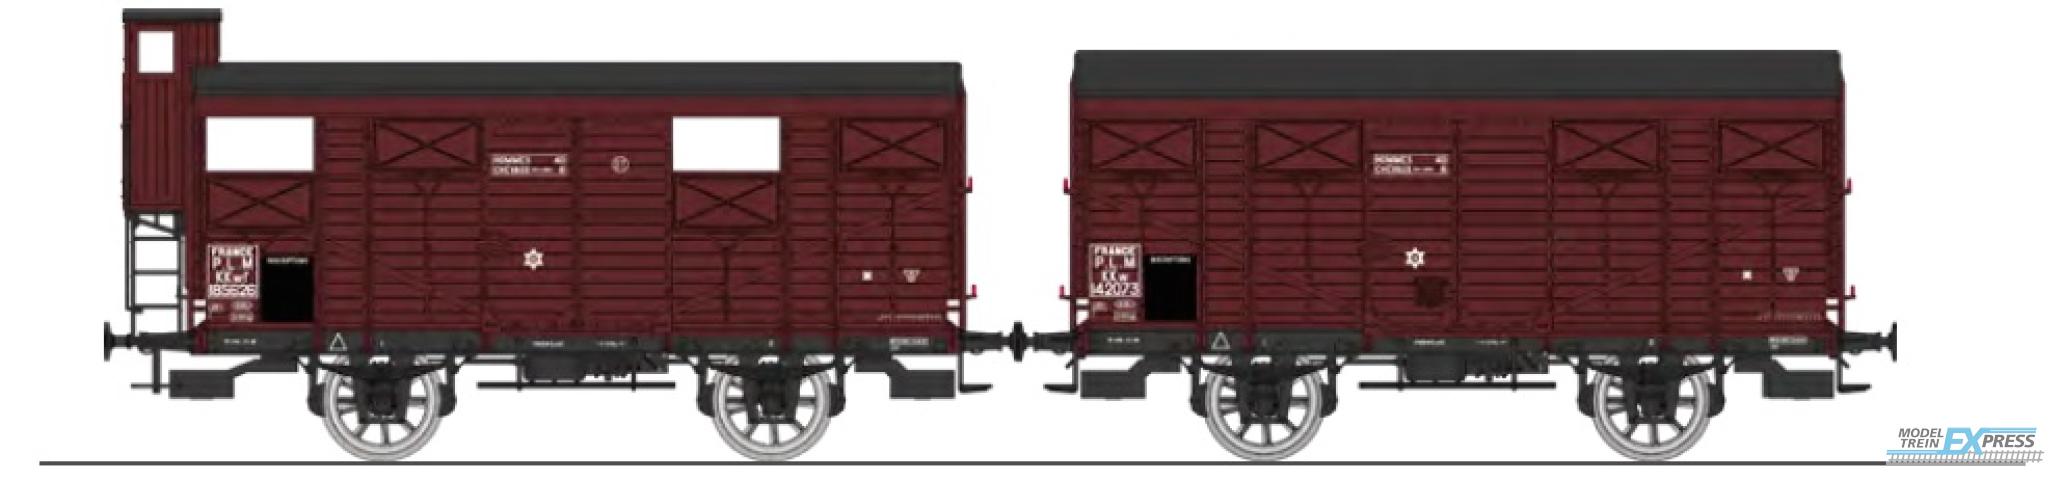 REE models WB-696 Set of 2 PLM 20 T Closed Wagon Sideros red, N° KKwf 185626 with brakesman home and N° KKw 142073, PLM Era II